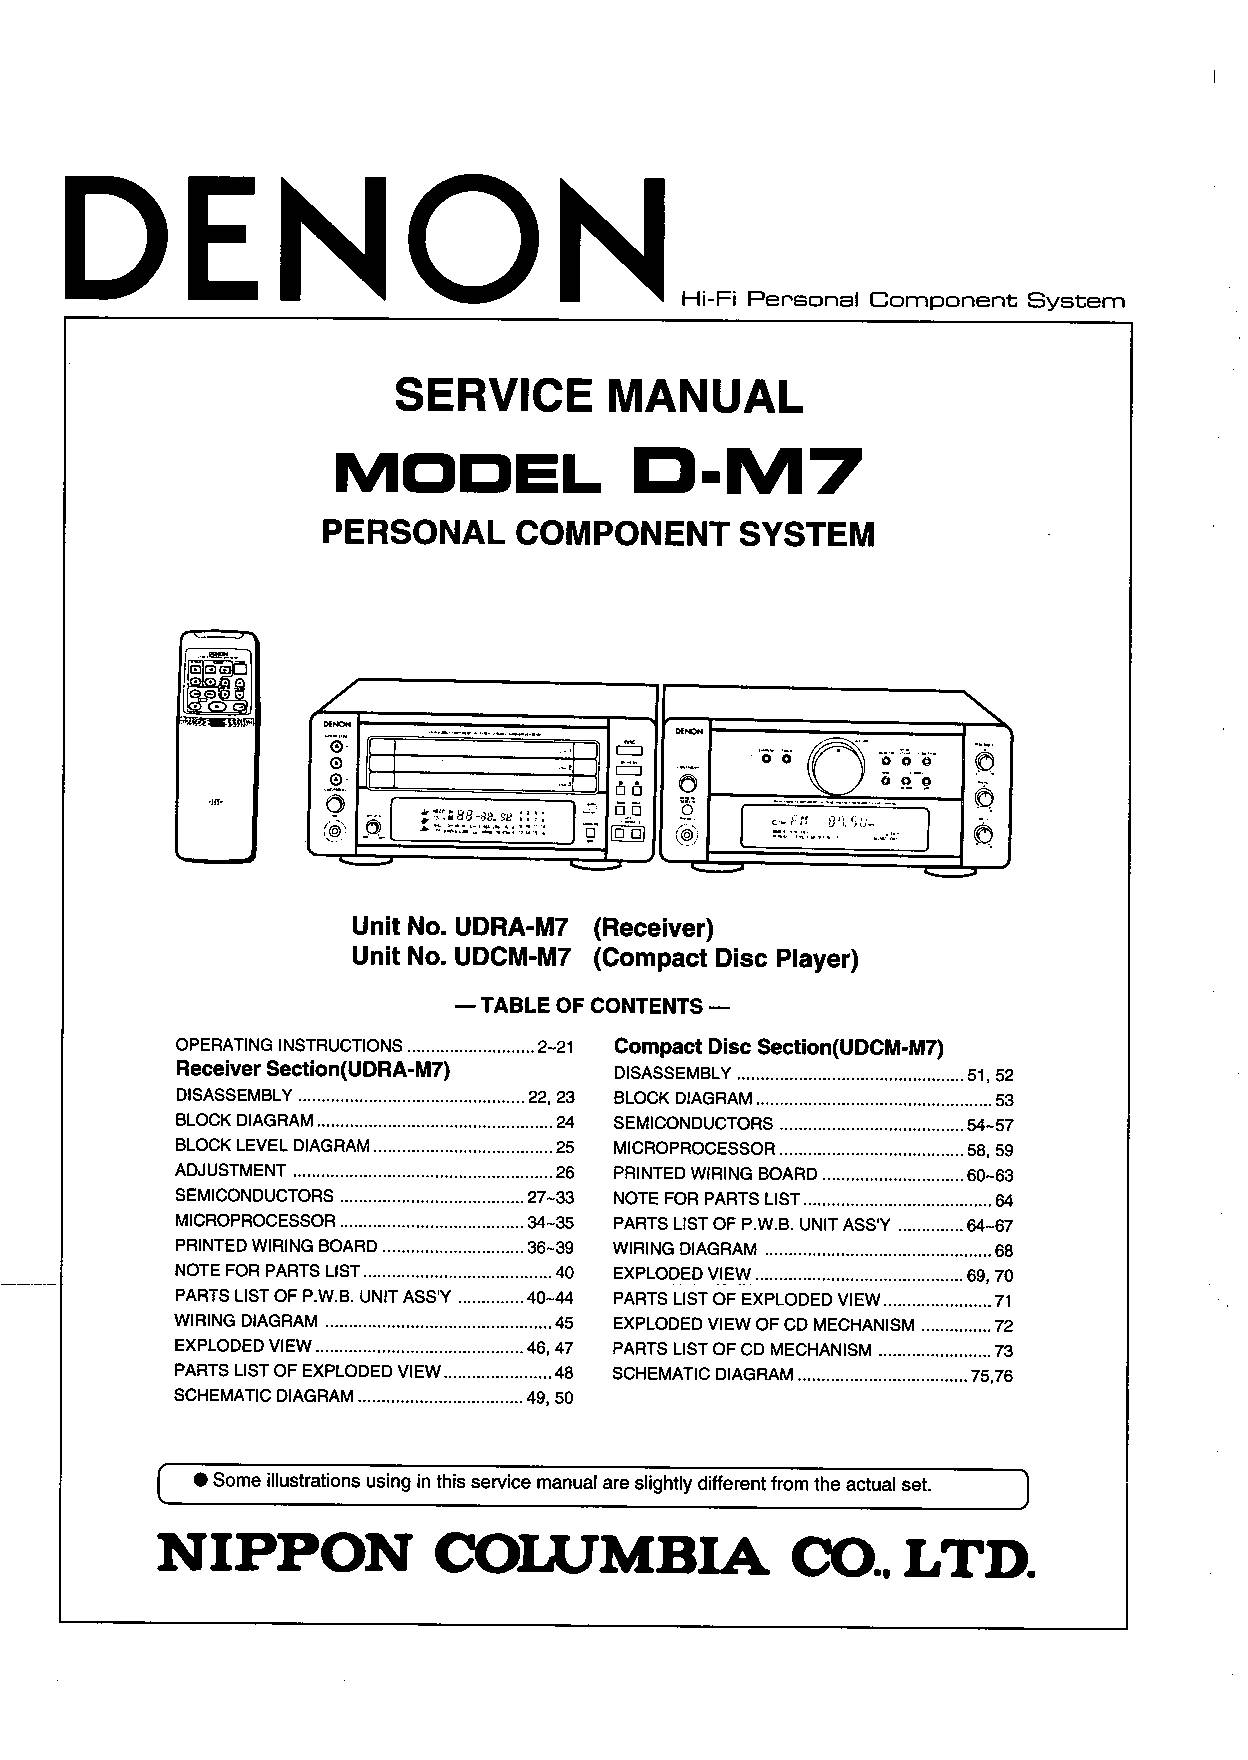 Denon D-M7